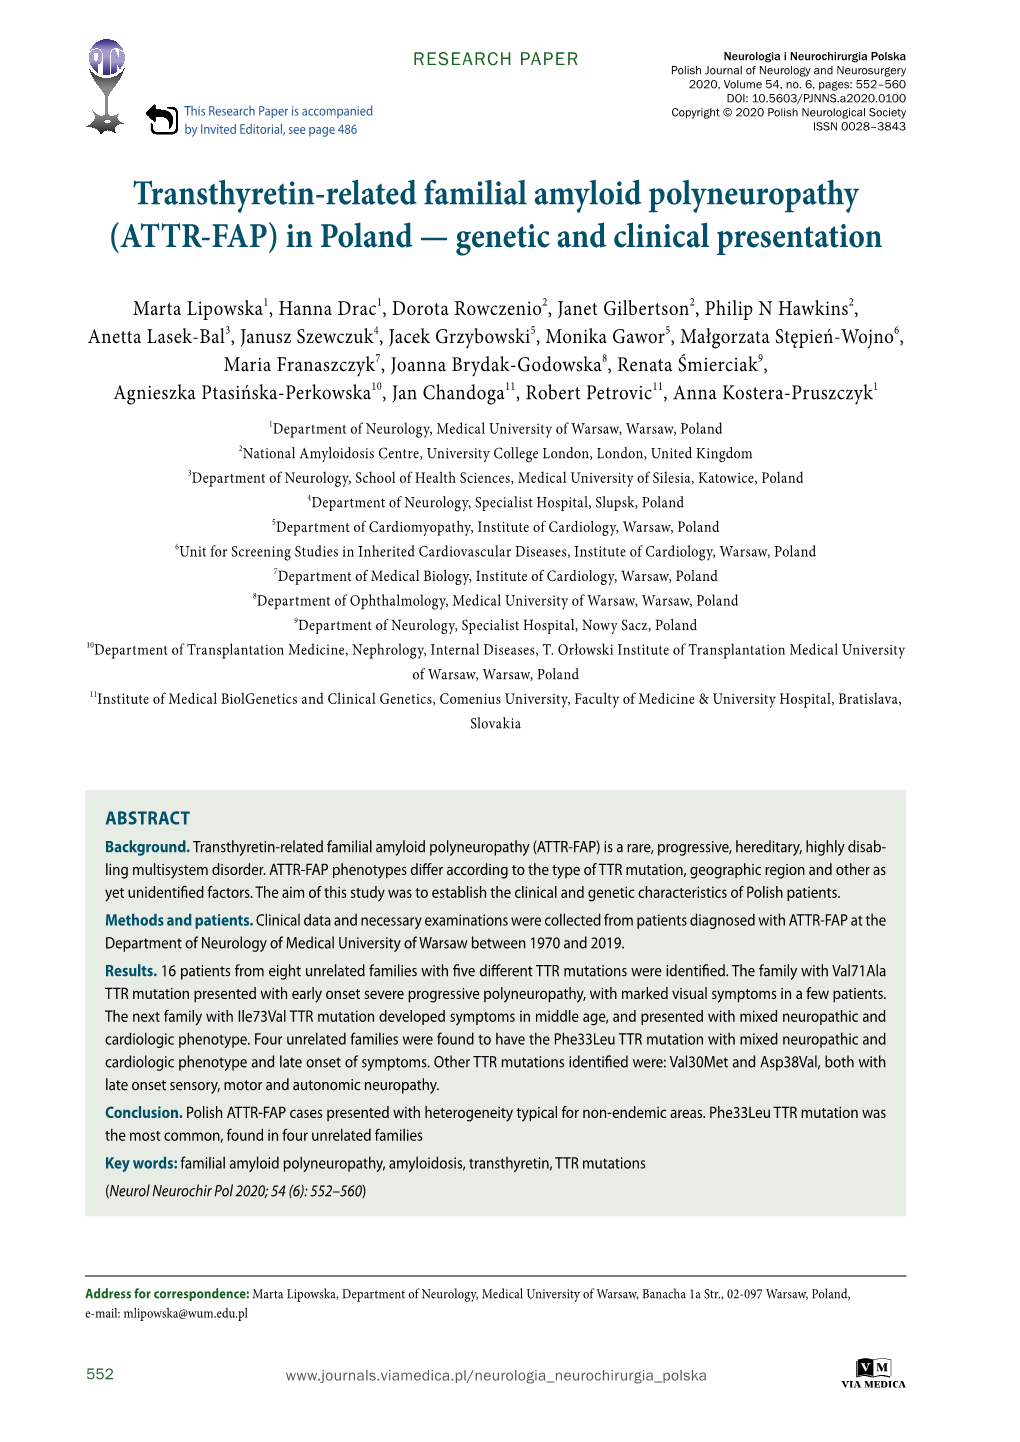 Transthyretin-Related Familial Amyloid Polyneuropathy (ATTR-FAP) in Poland — Genetic and Clinical Presentation